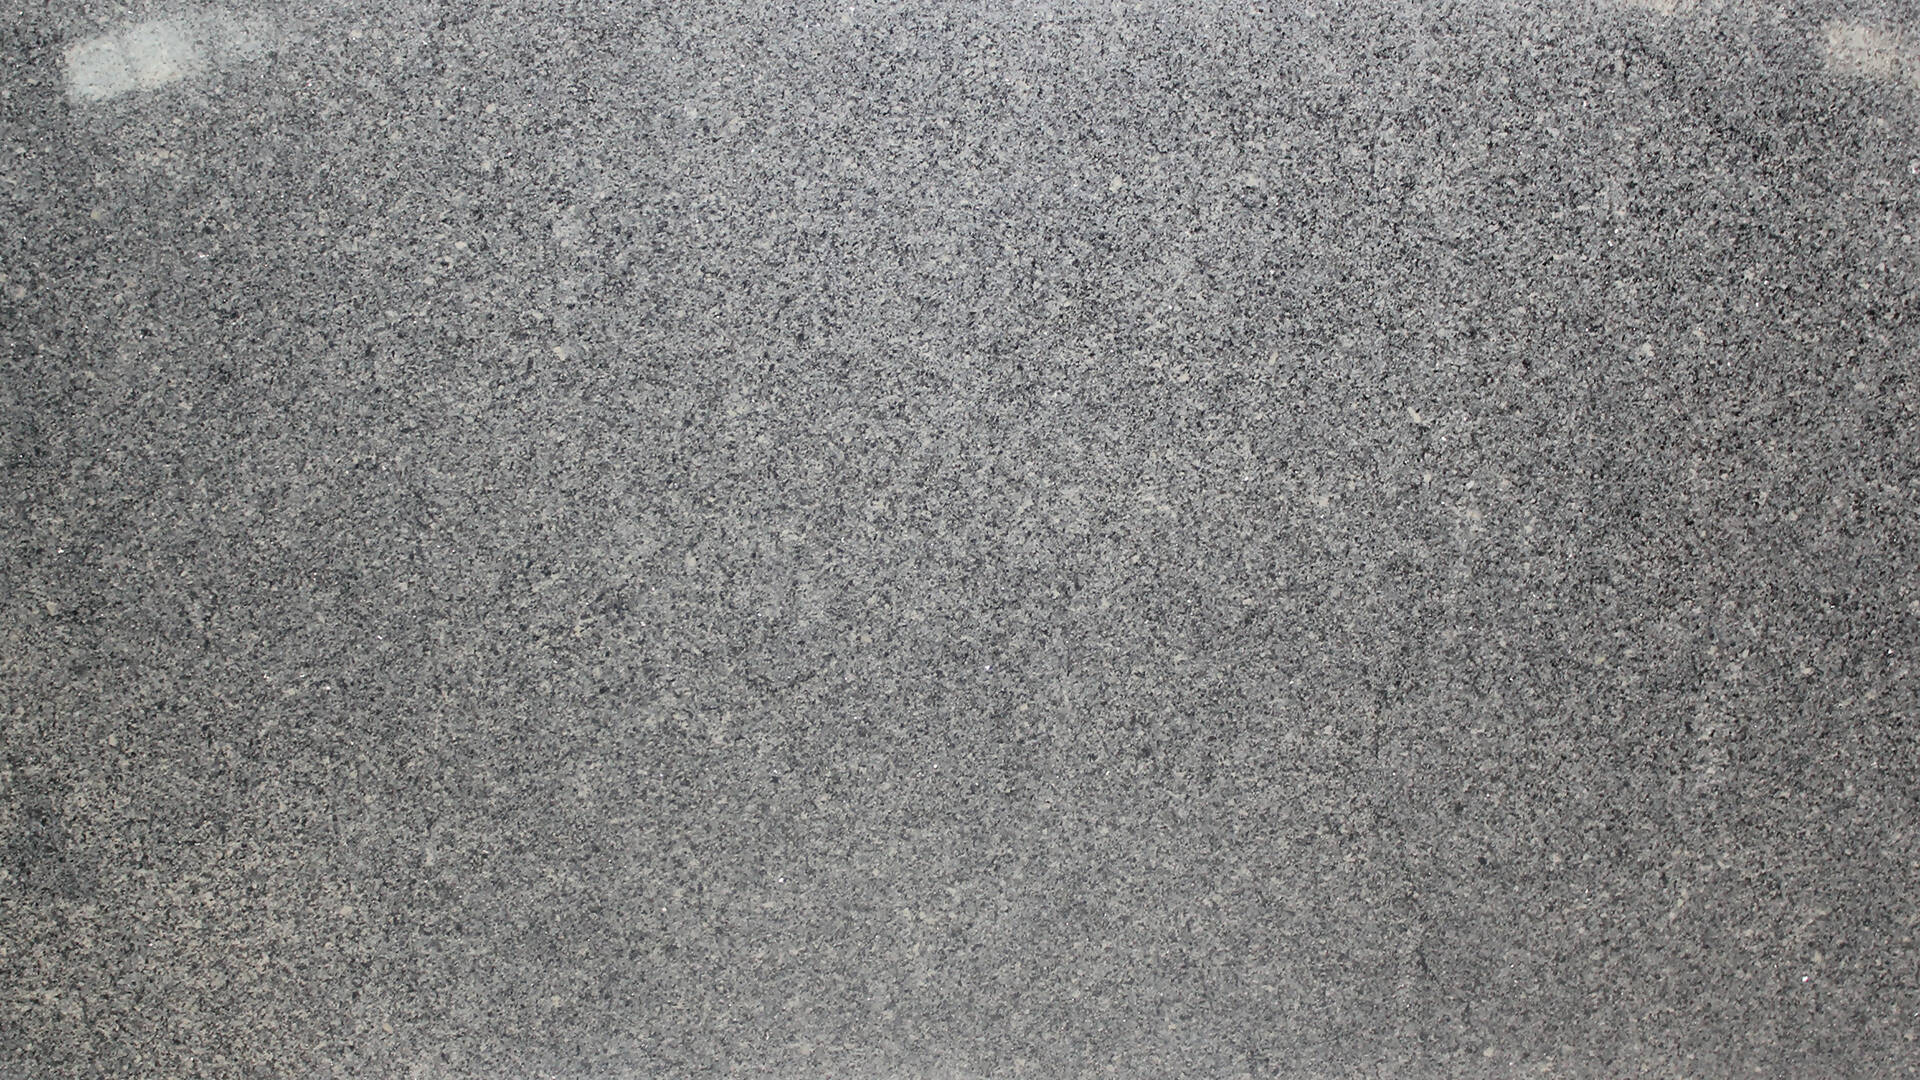 AZUL PLATINO GRANITE,Granite,KSG UK LTD,www.work-tops.com